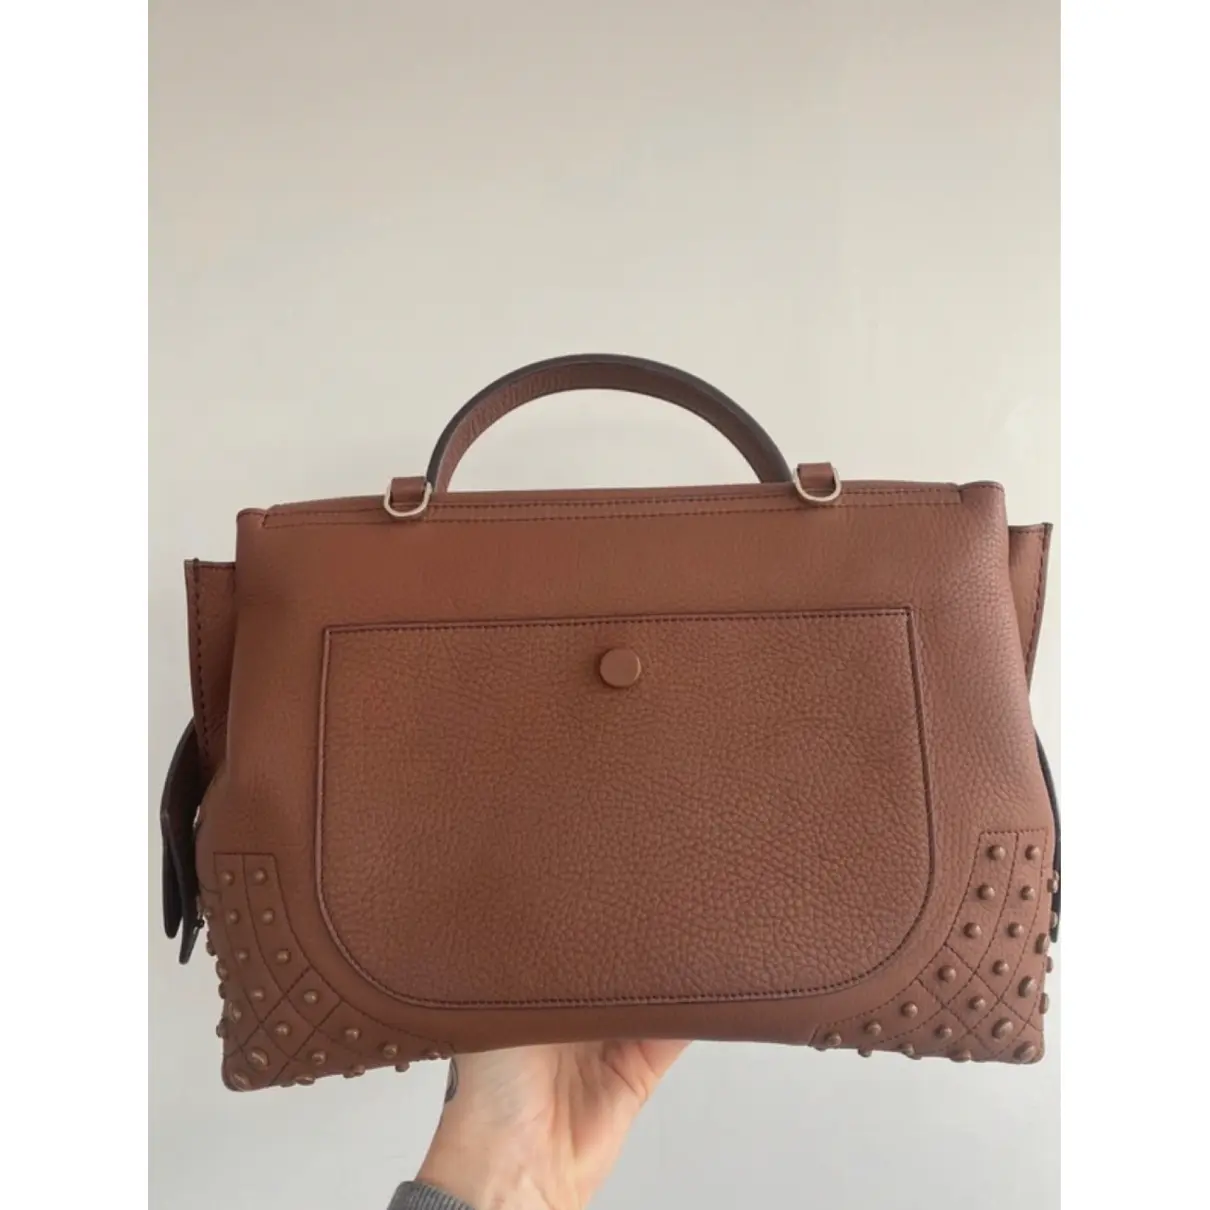 Buy Tod's Wave leather handbag online